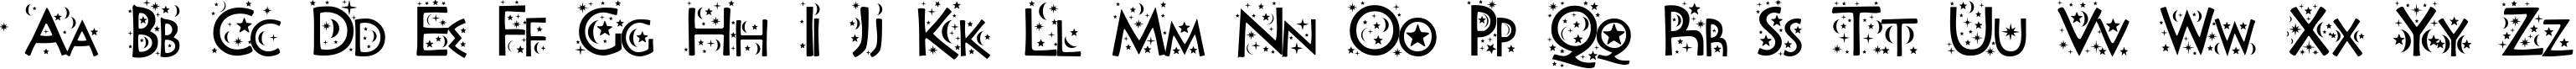 Пример написания английского алфавита шрифтом Night Sky